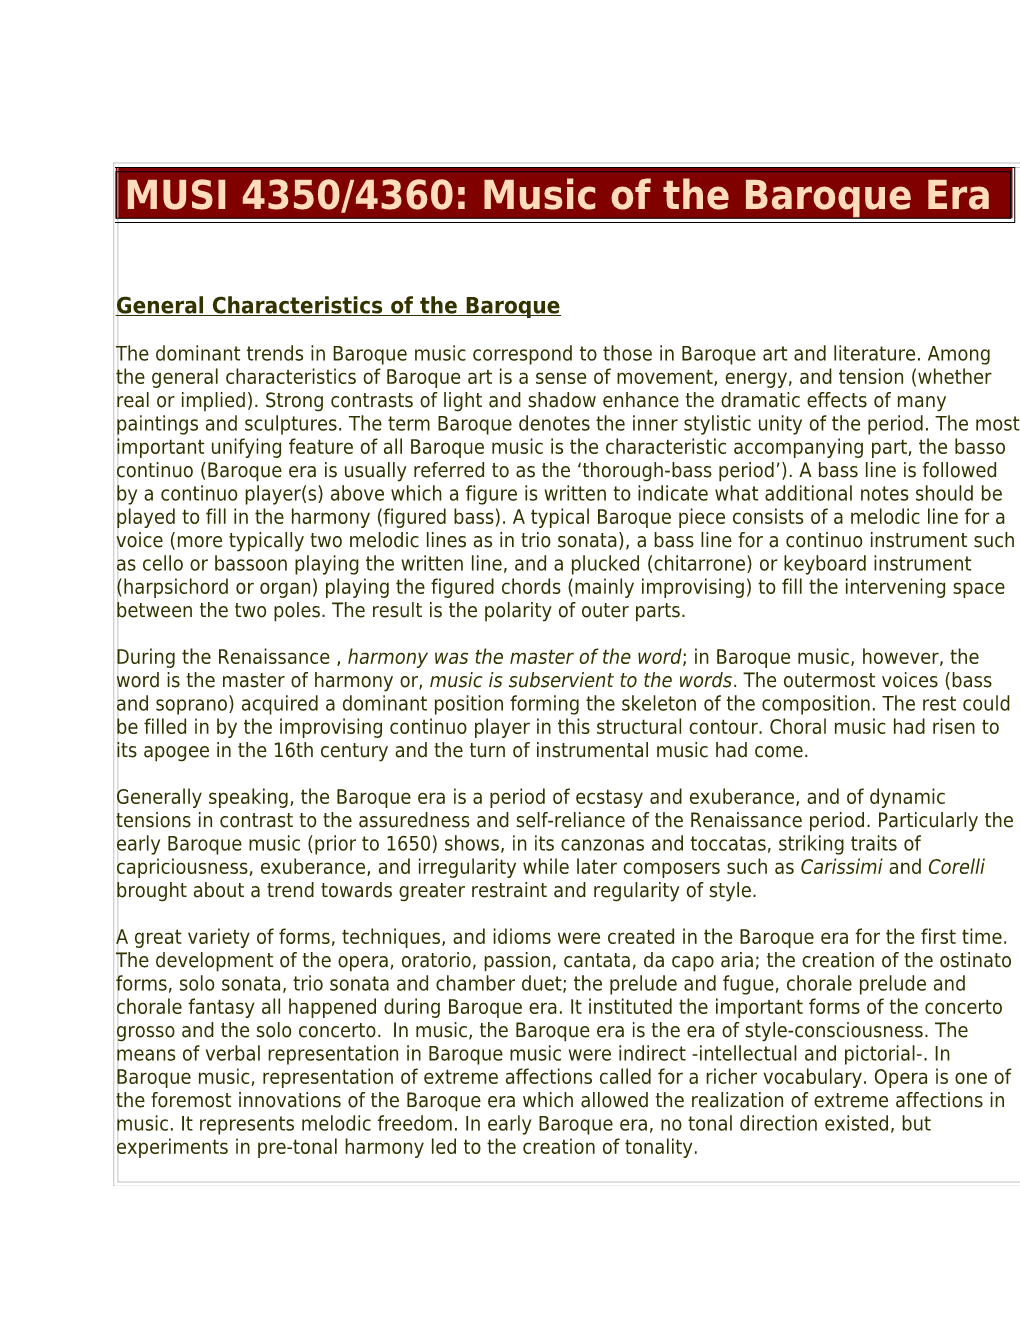 Characteristics of Baroque Music